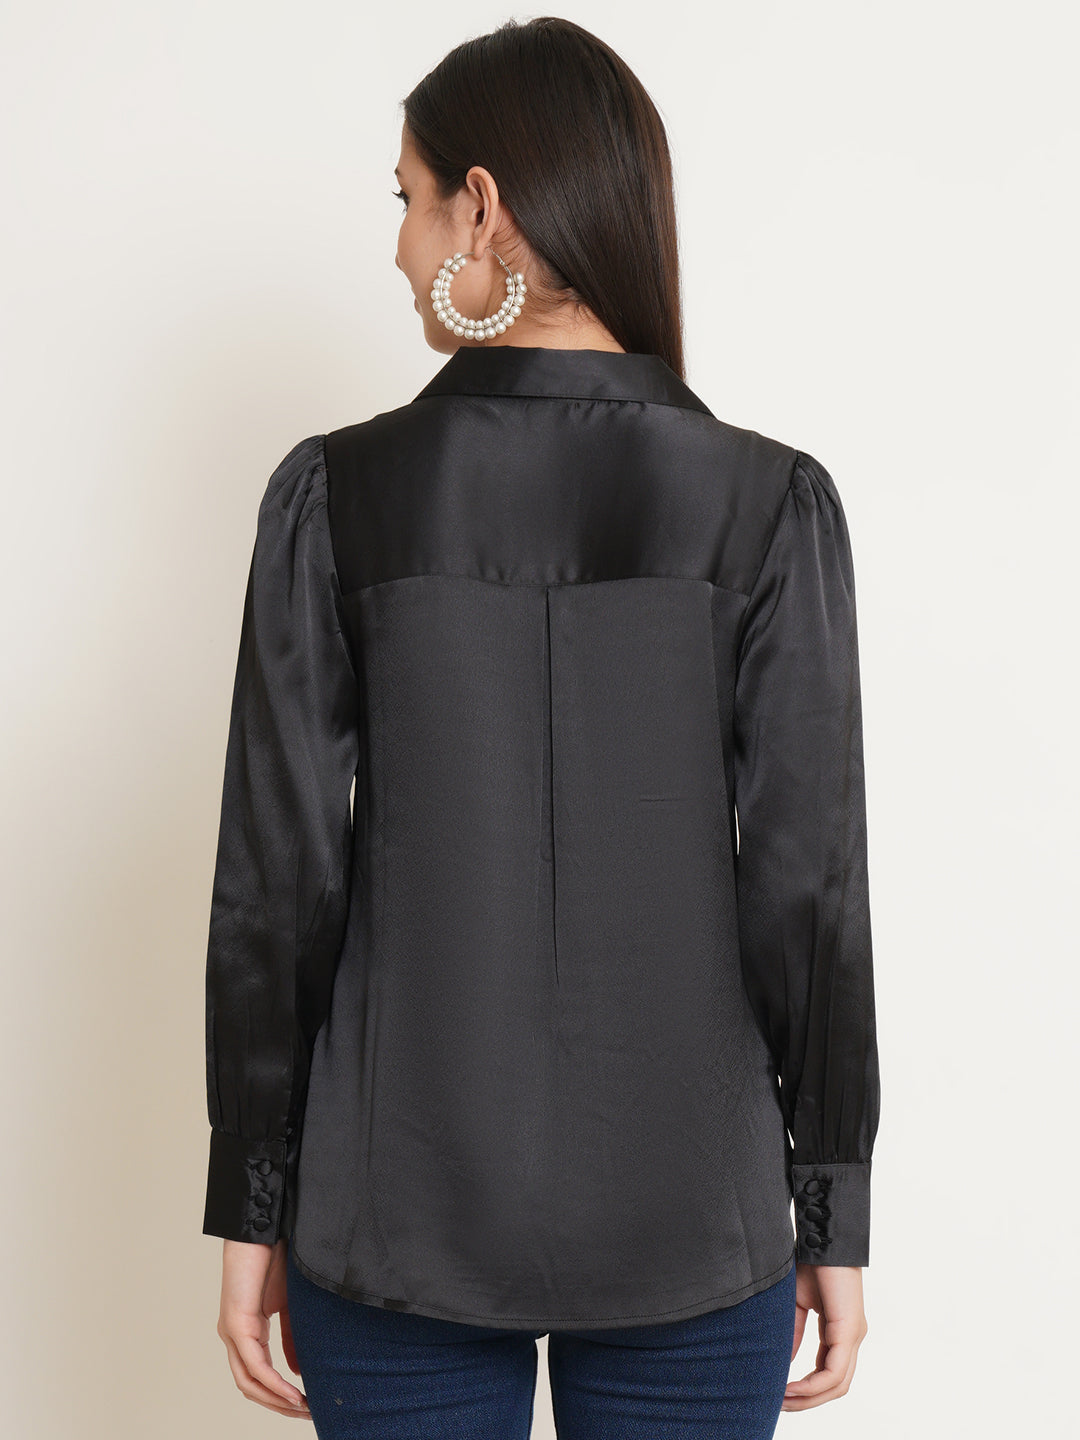 Women Black Solid Satin Full Sleeves Shirt Collared Tops